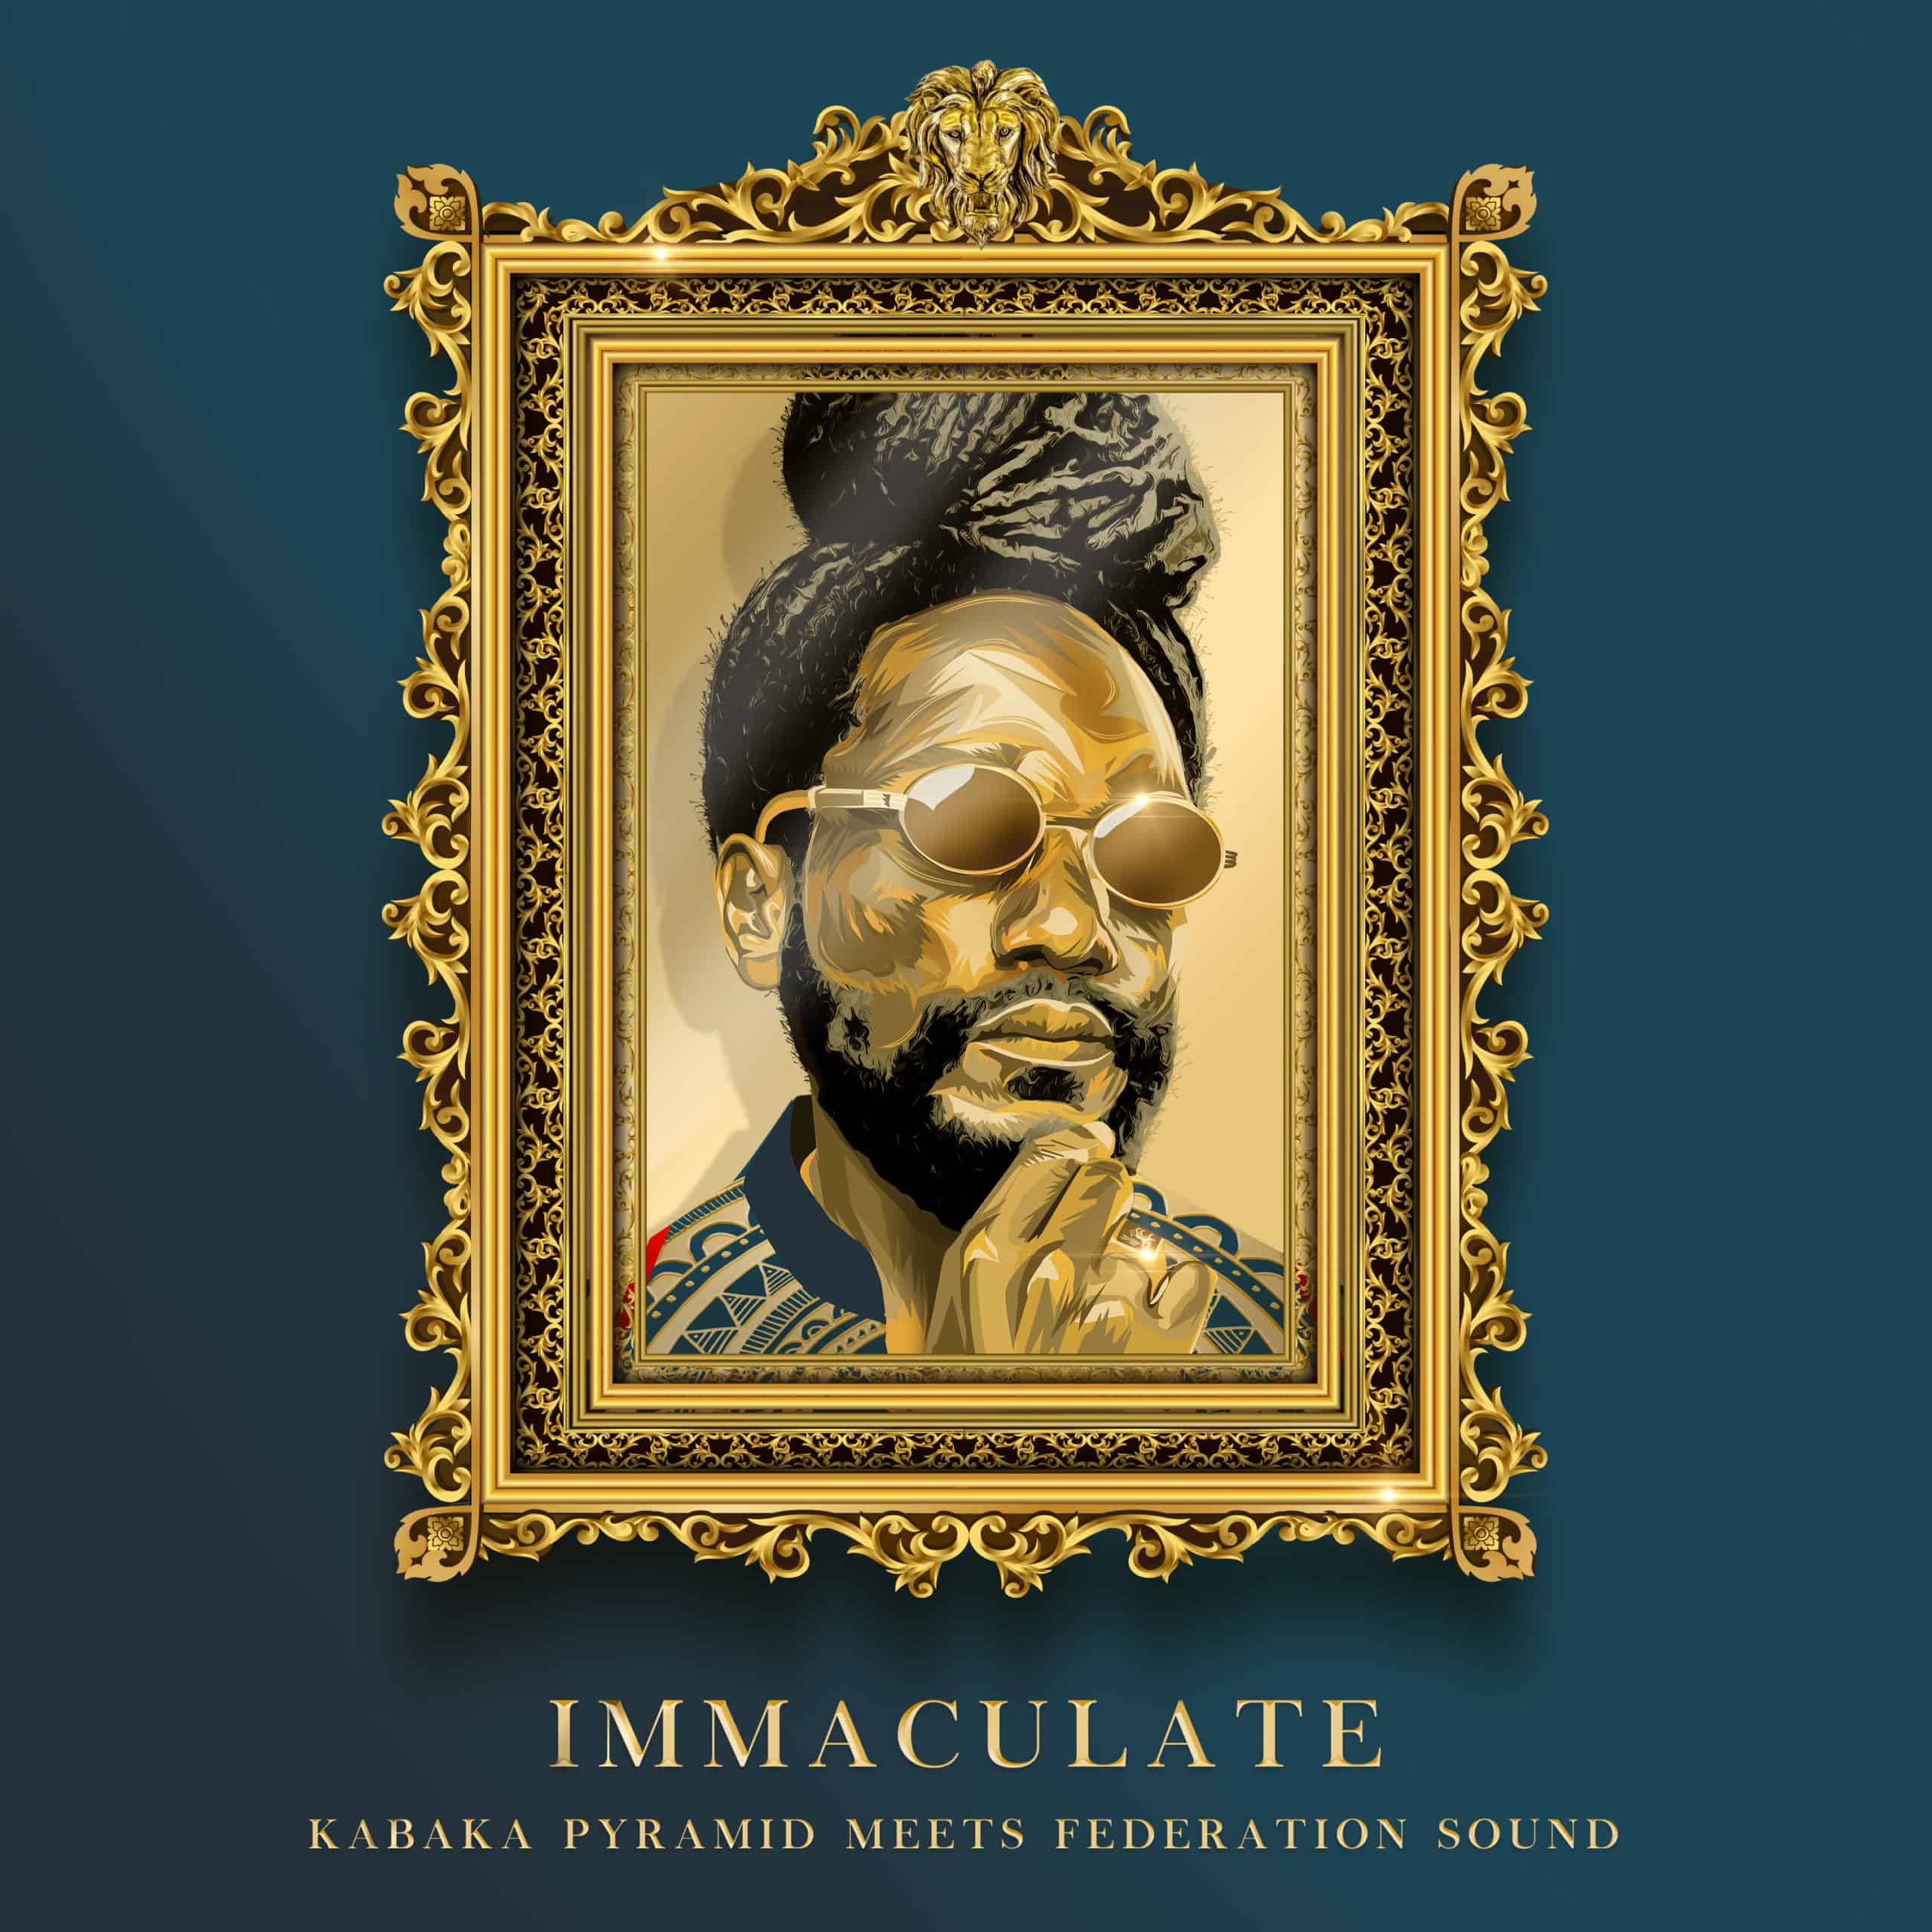 Kabaka Pyramid meets Federation Sound “Immaculate” Mixtape